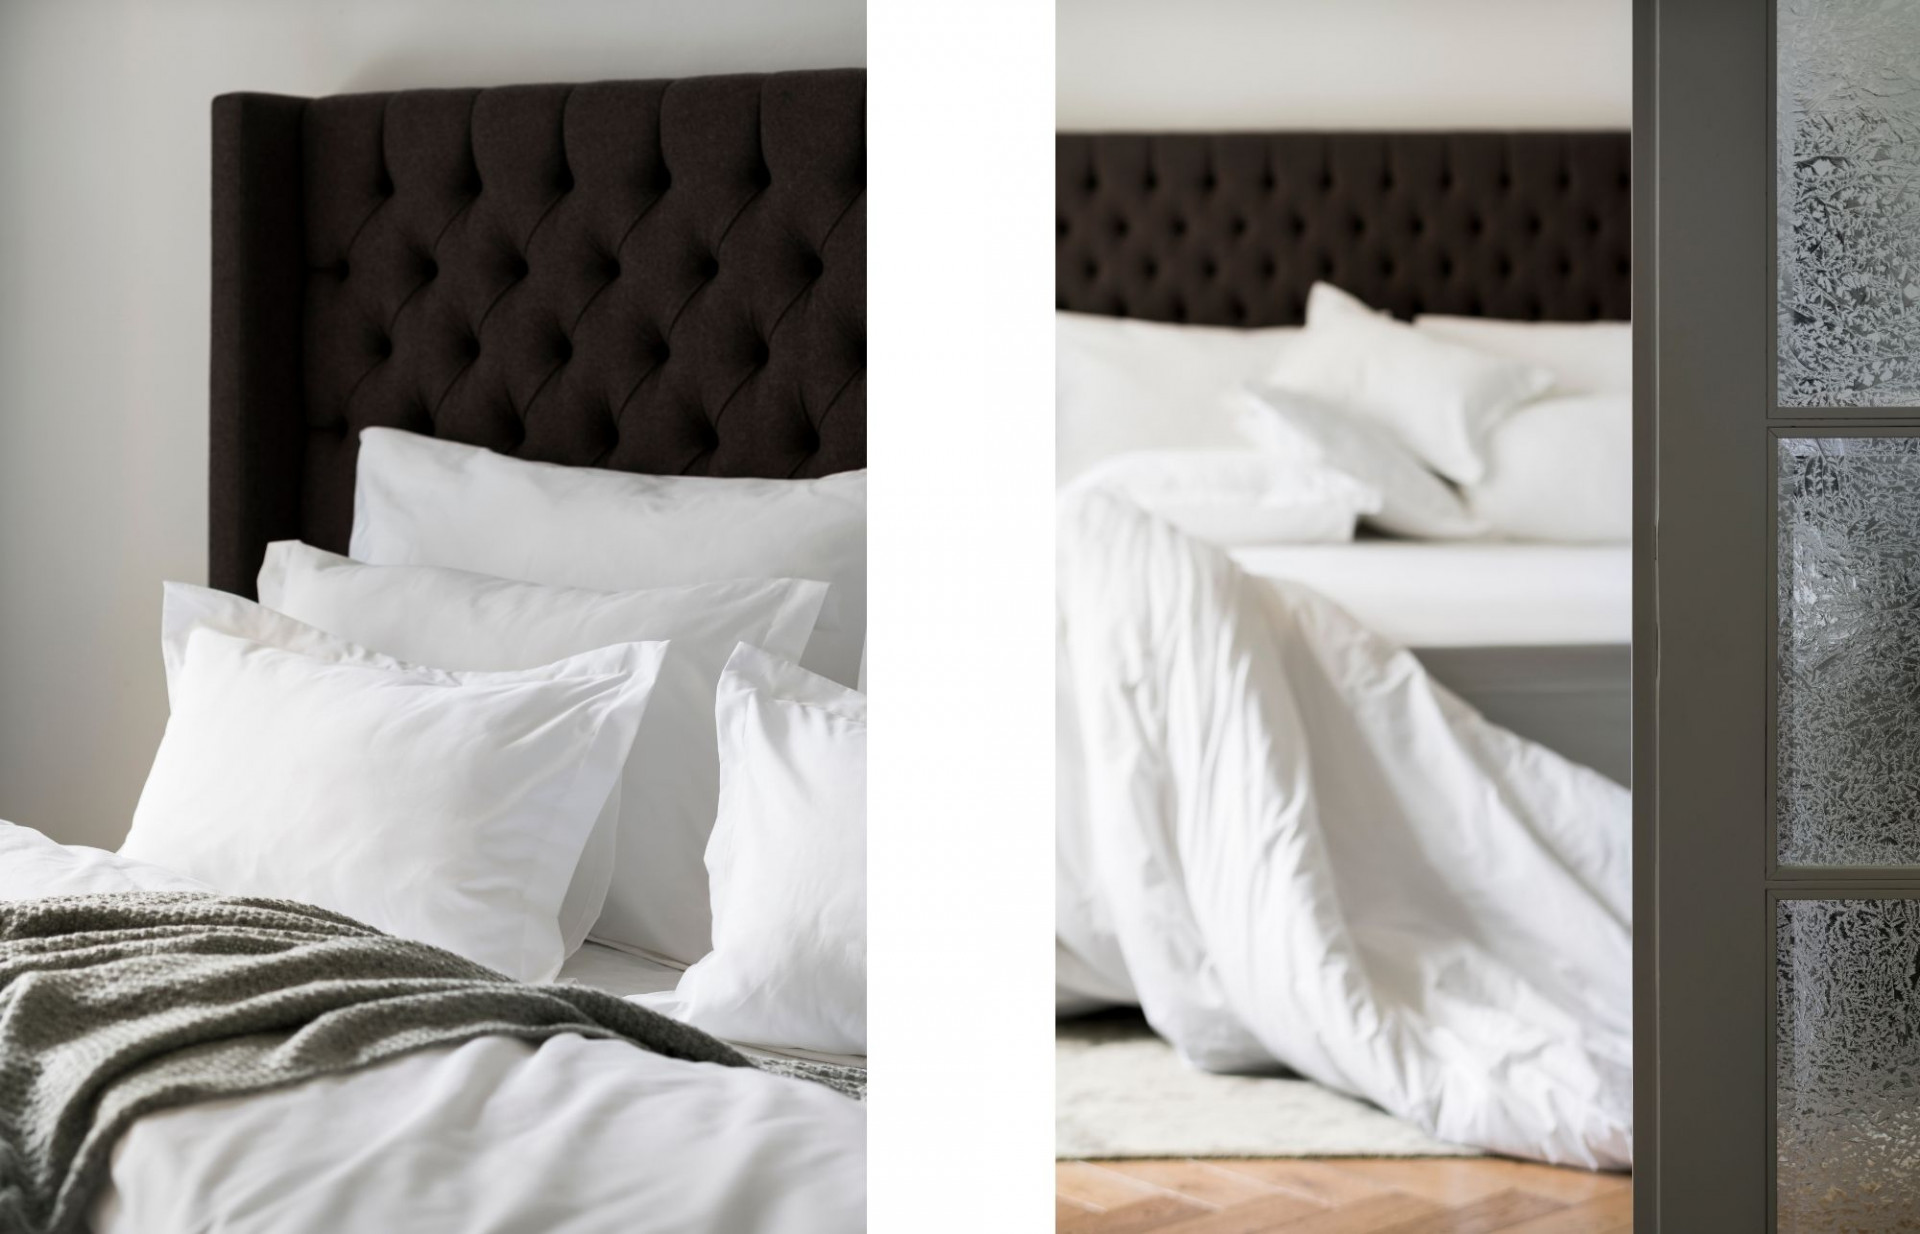 High hotel standards inspired Lejaan’s duvet cover style.